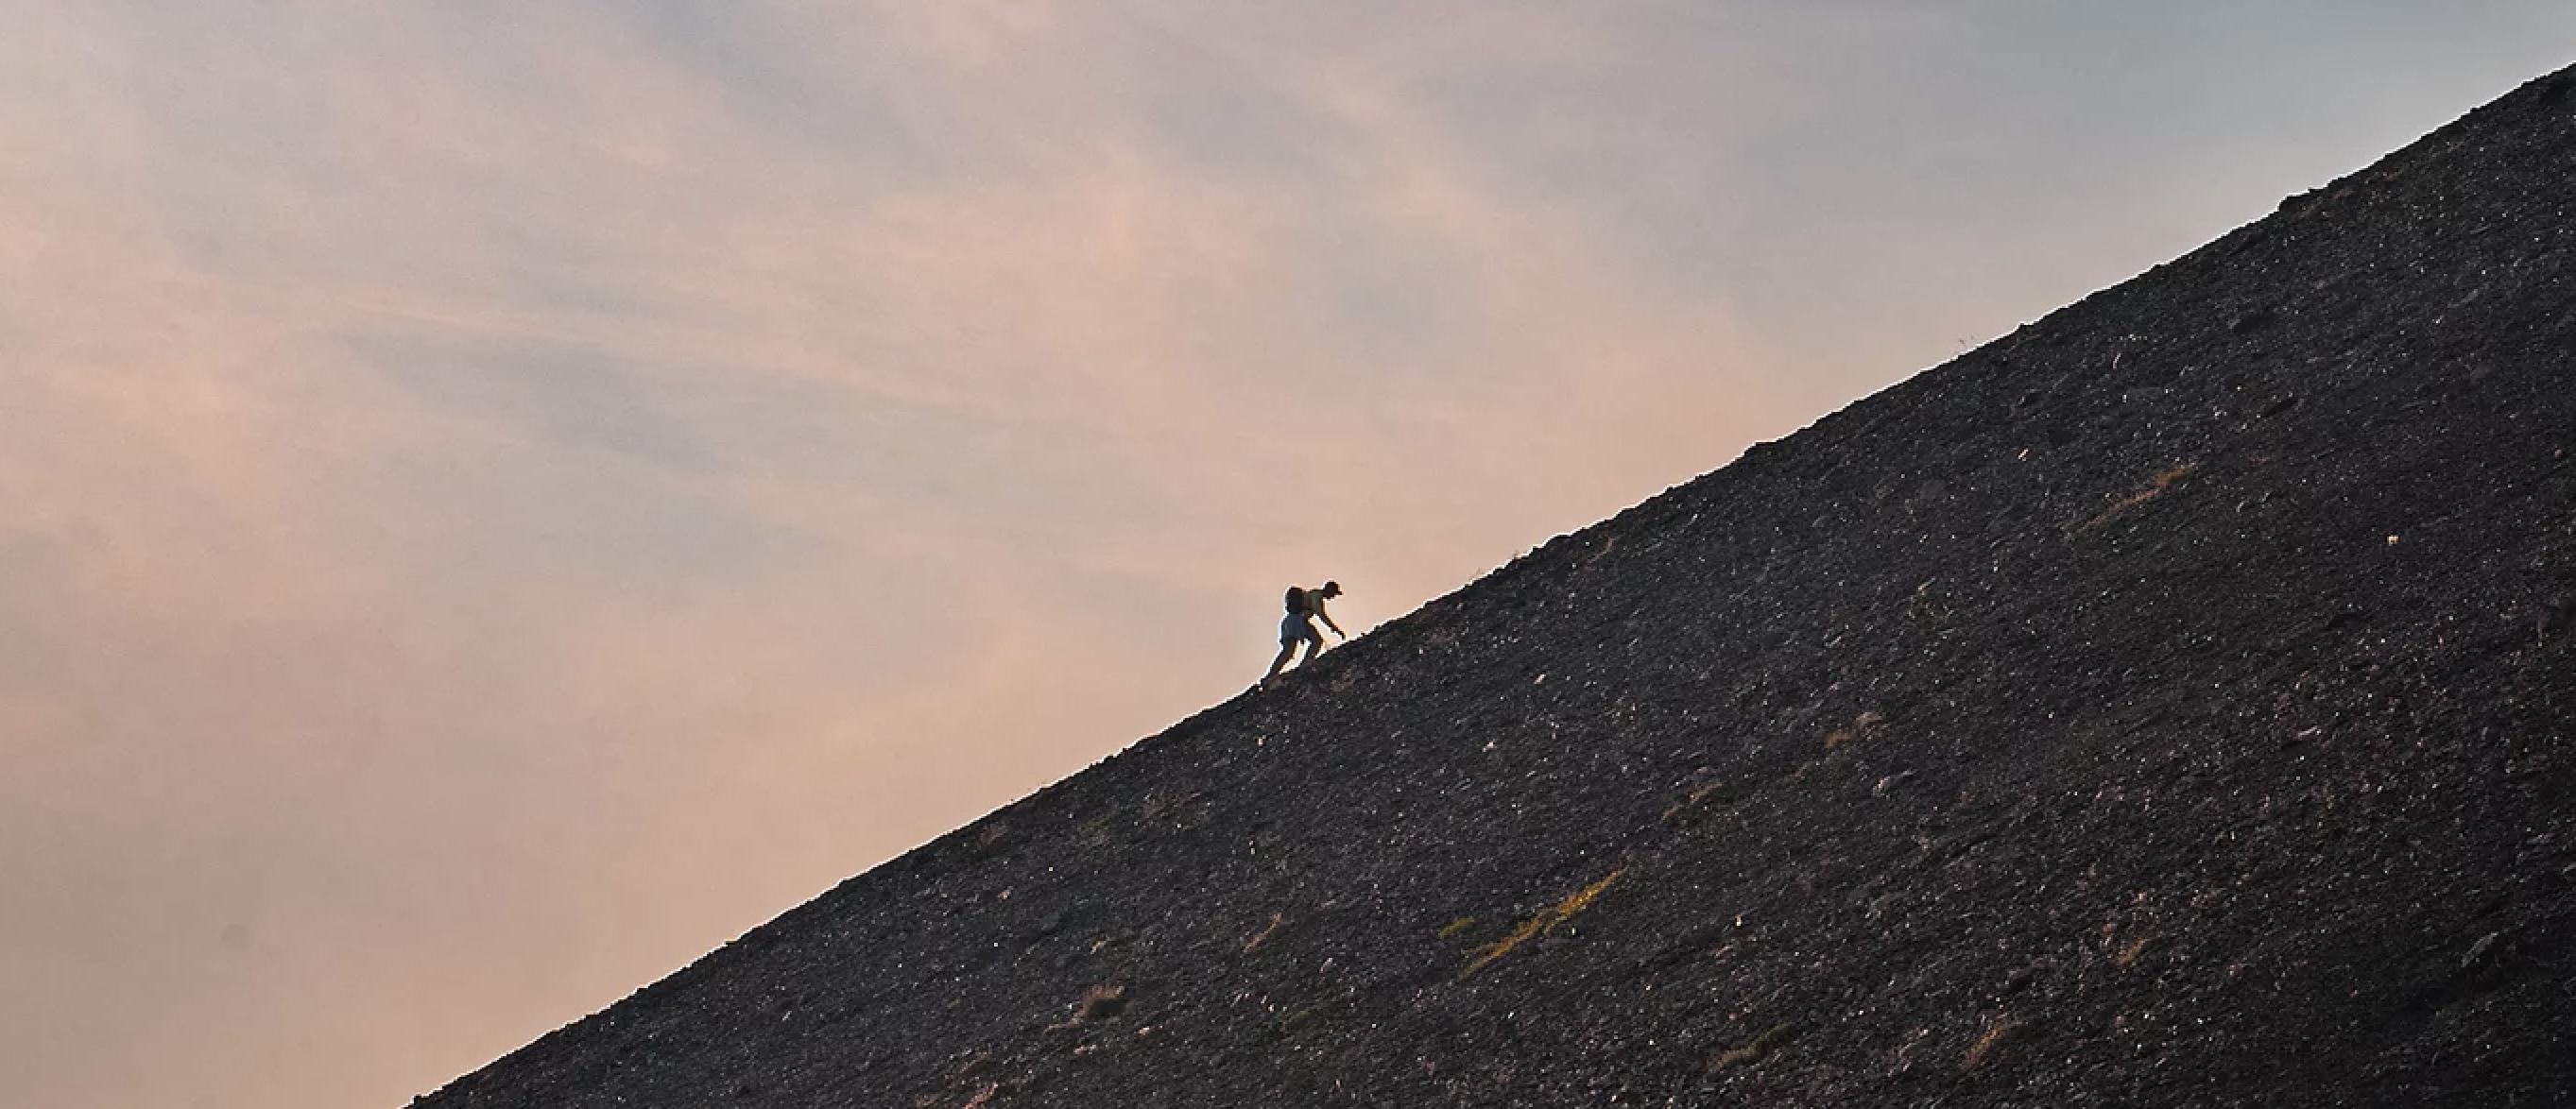 Hiker scaling a rocky mountain in Alaska